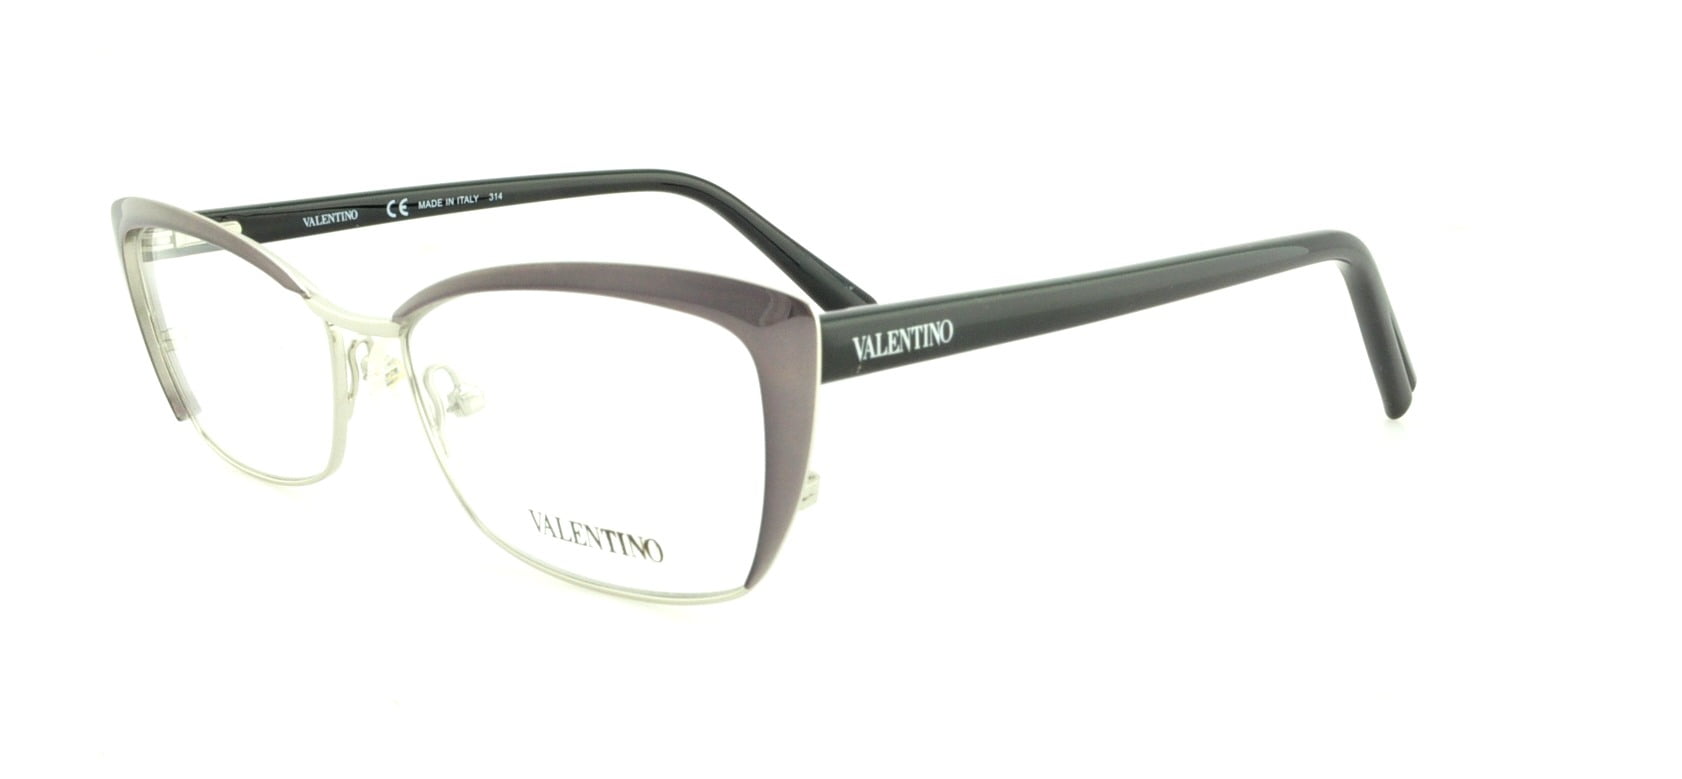 VALENTINO Eyeglasses V2122 060 Gunmetal 52MM - Walmart.com